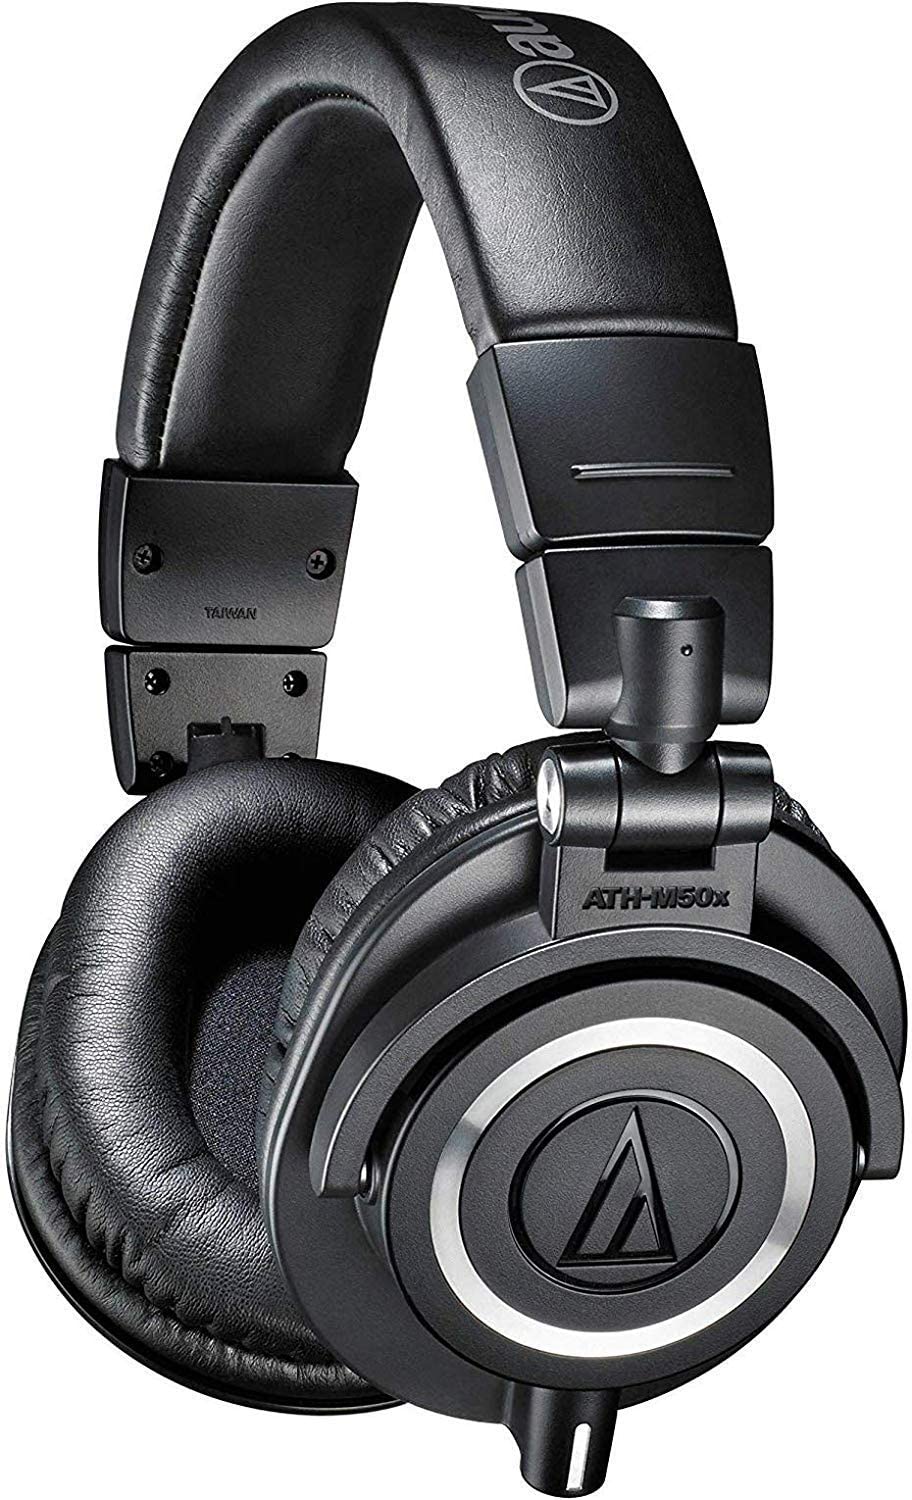 audio technica ath m50x headphones